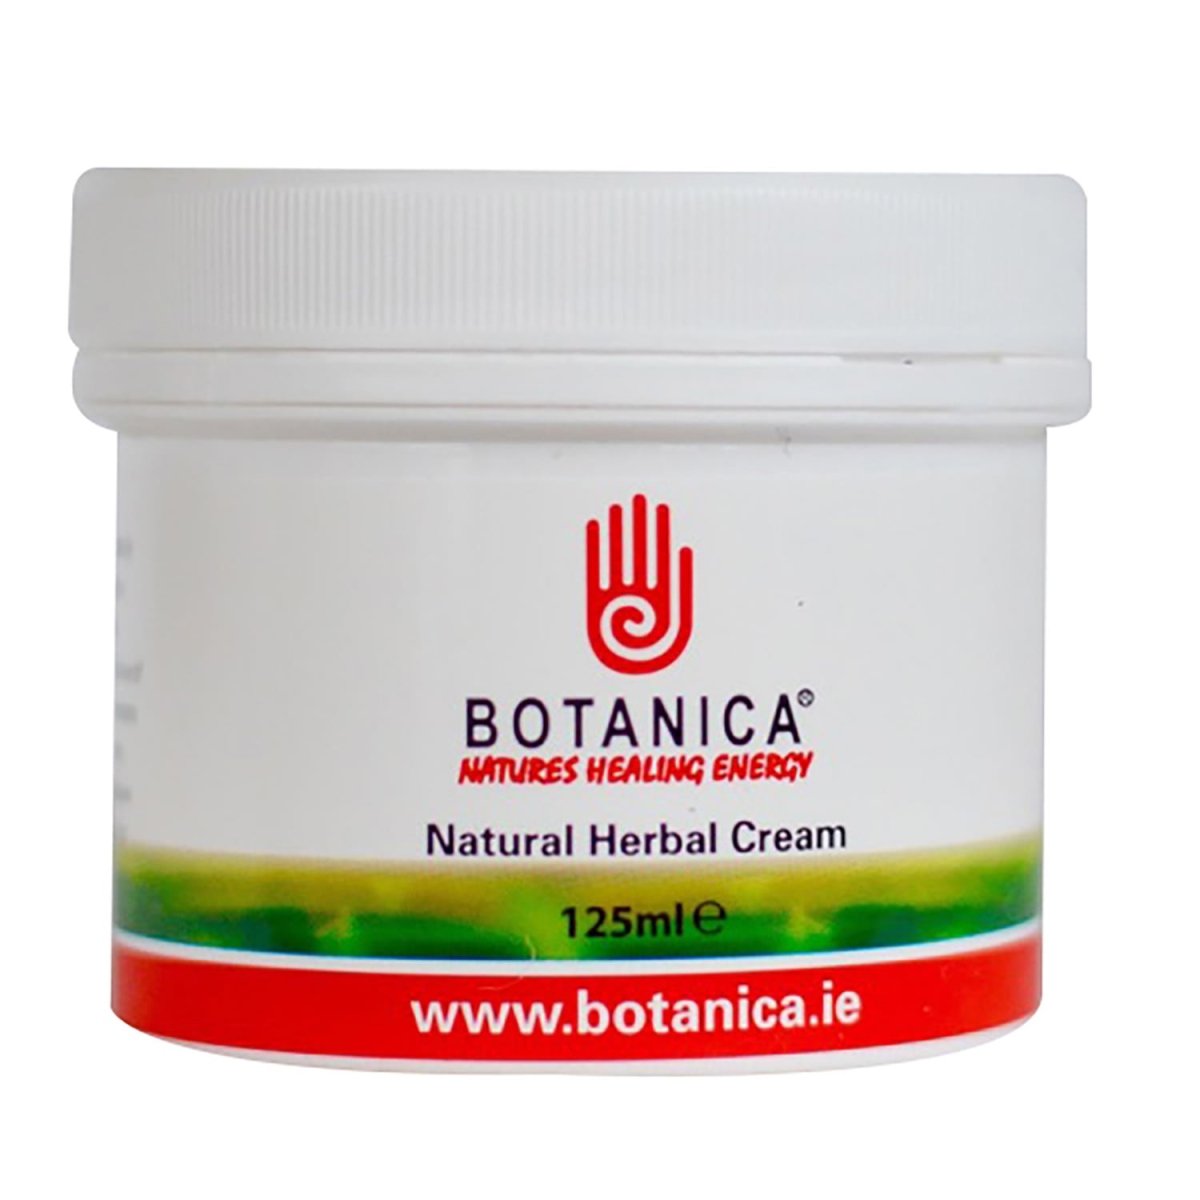 Botanica Natural Herbal Cream - 125Ml -